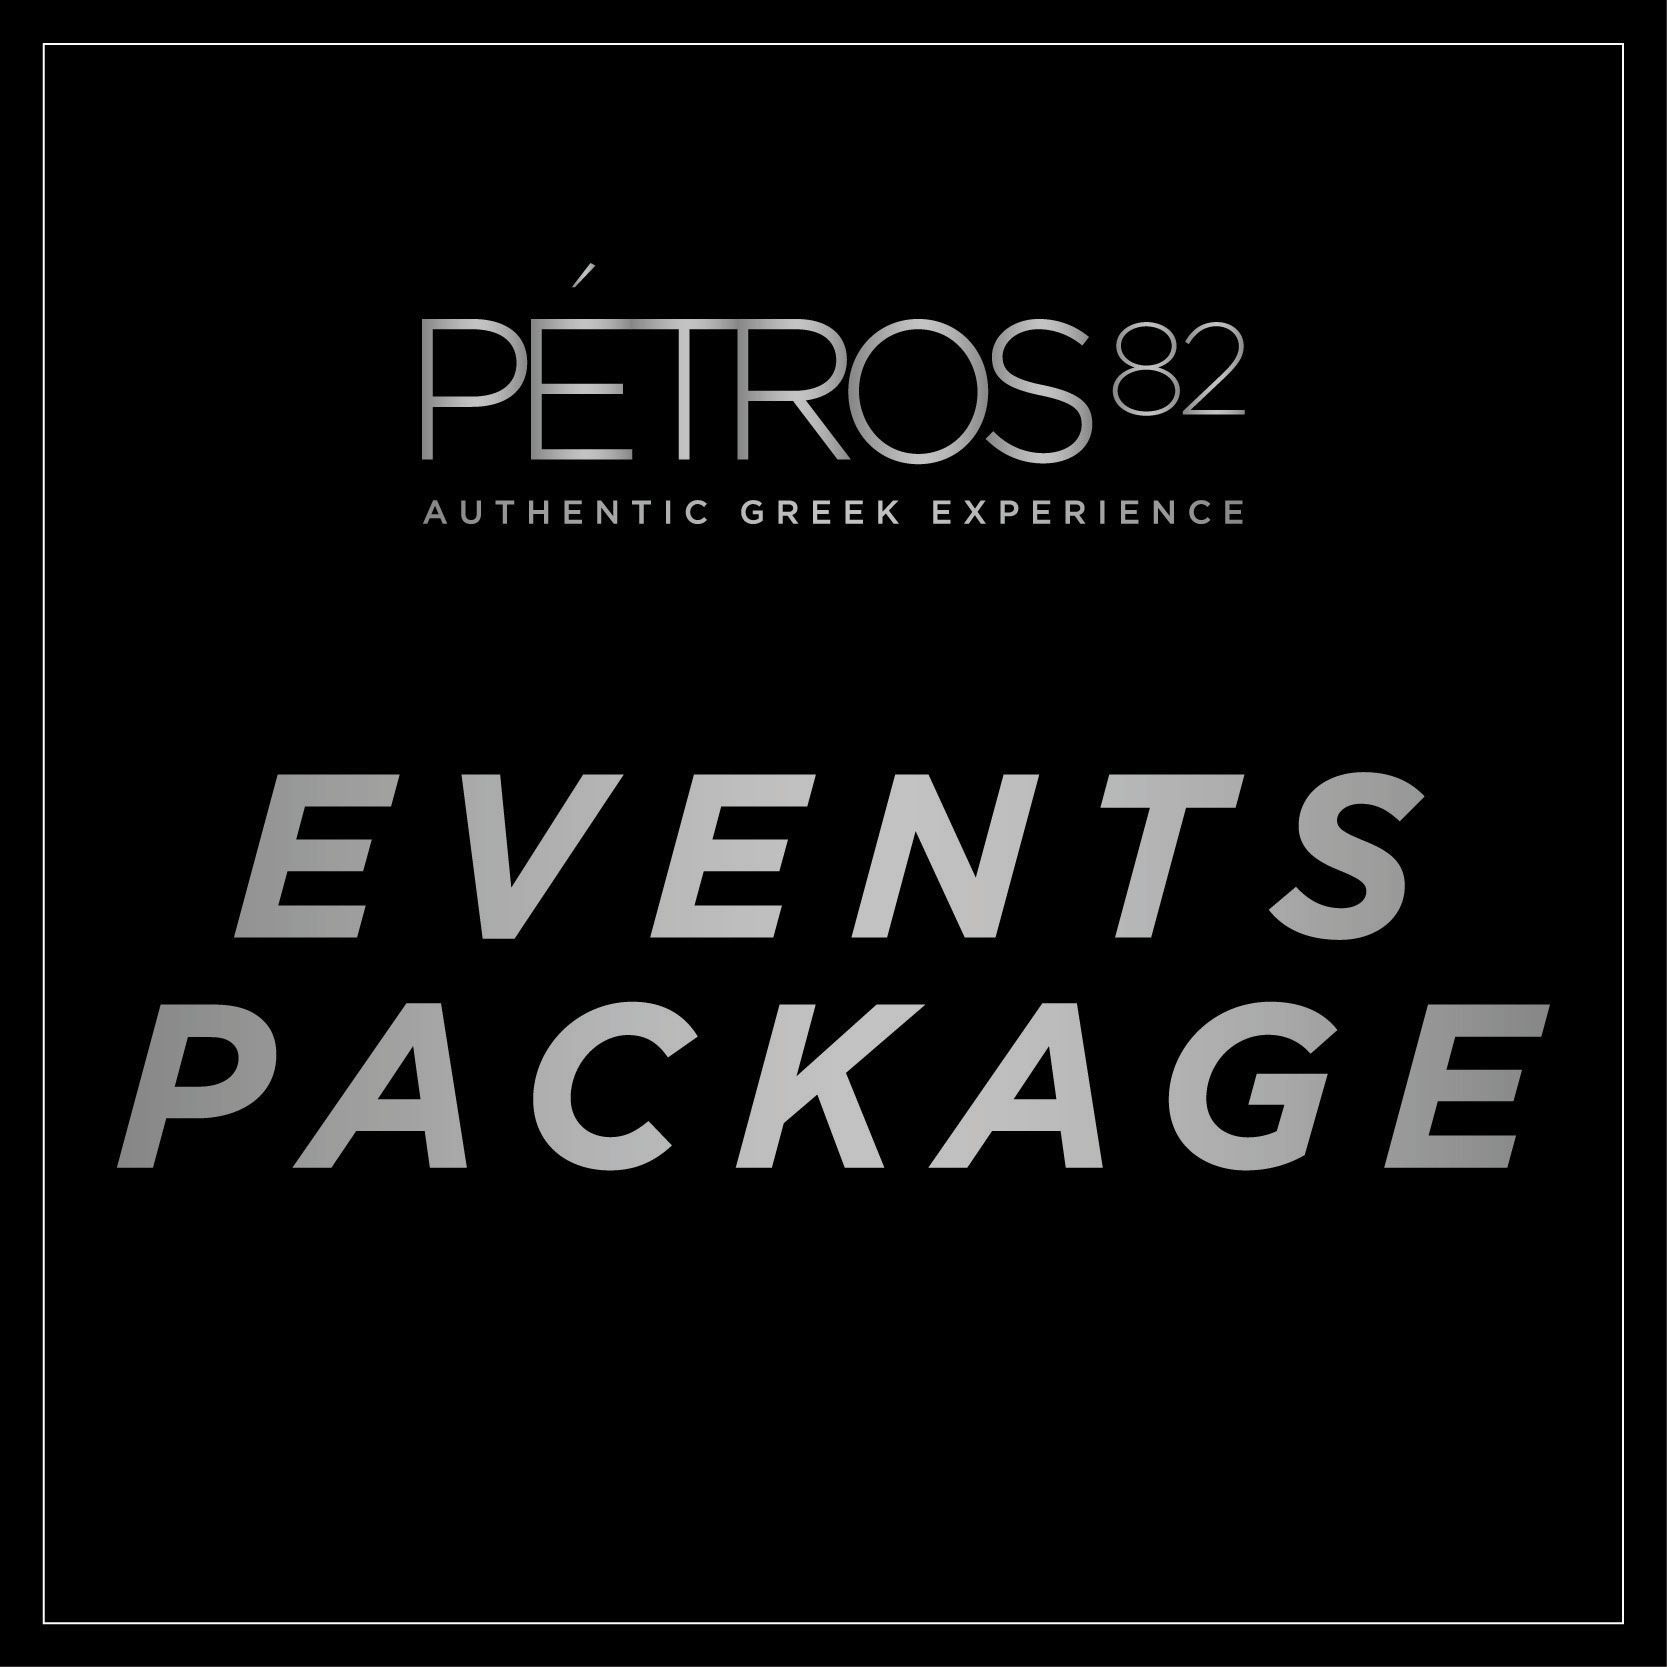 Petros82 Corporate Event